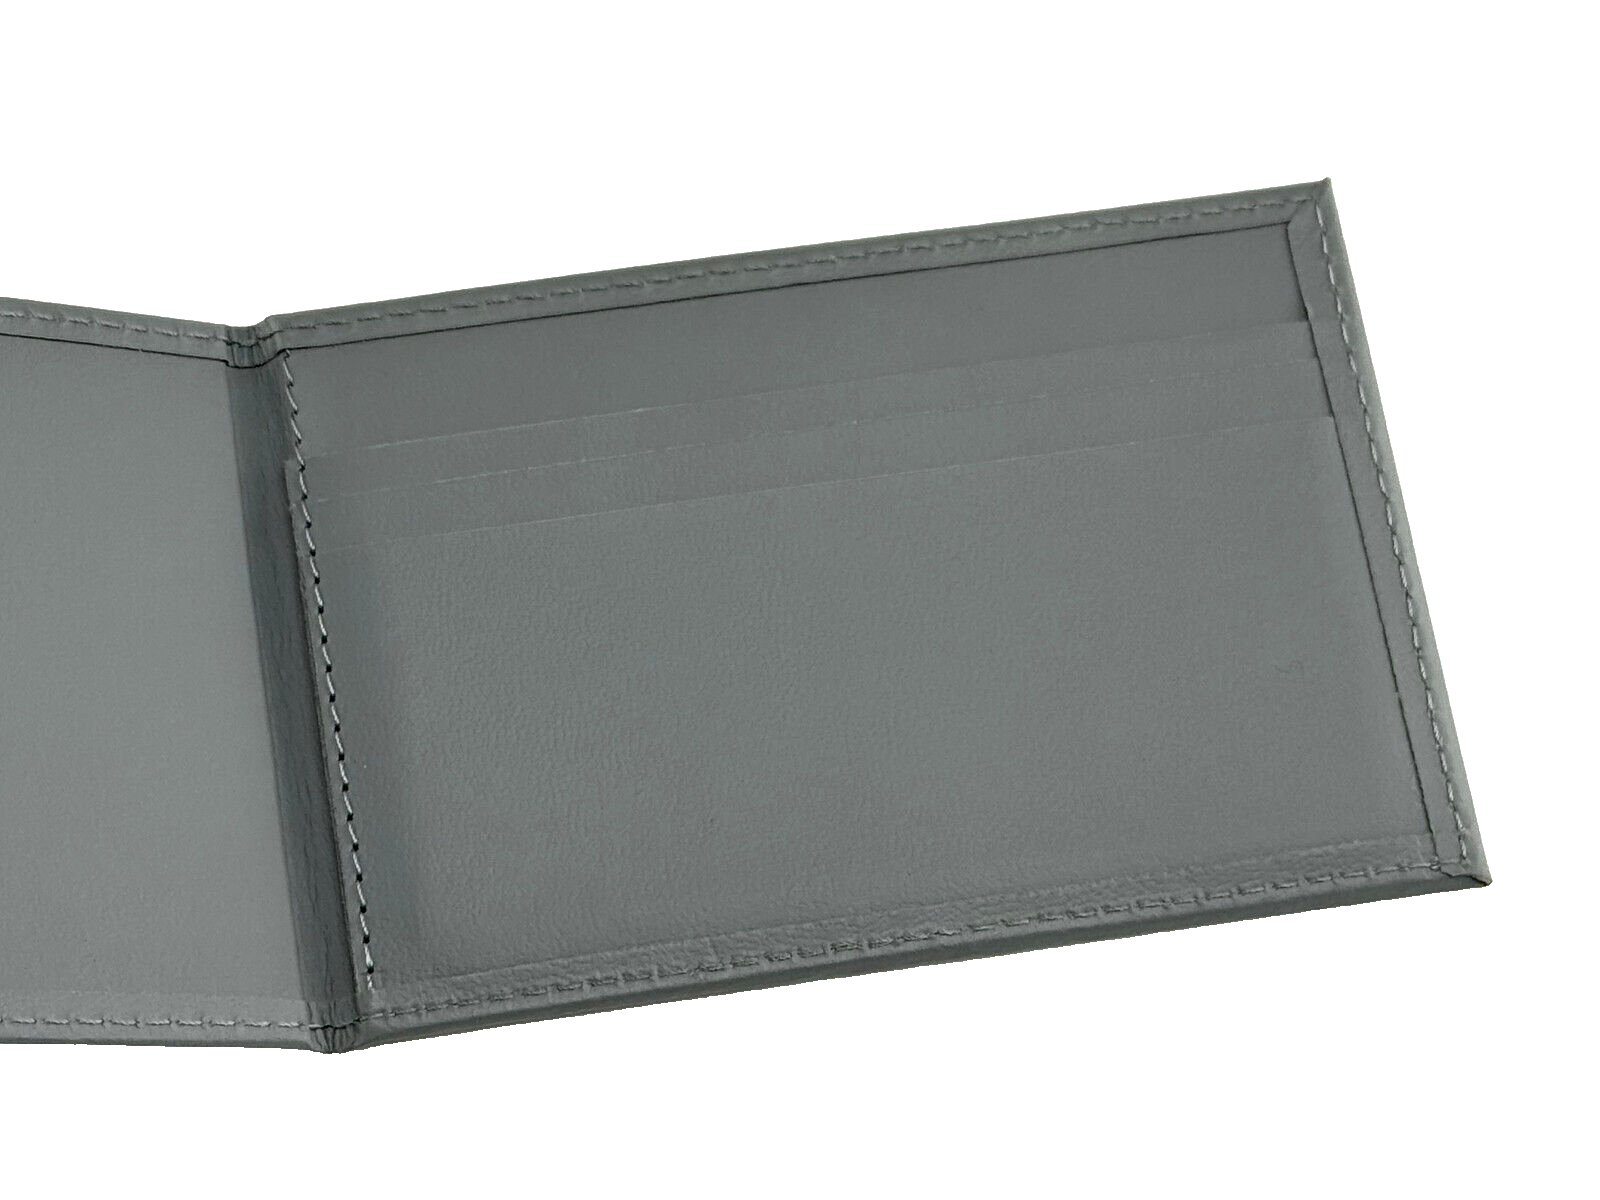 Omega card holder wallet gray